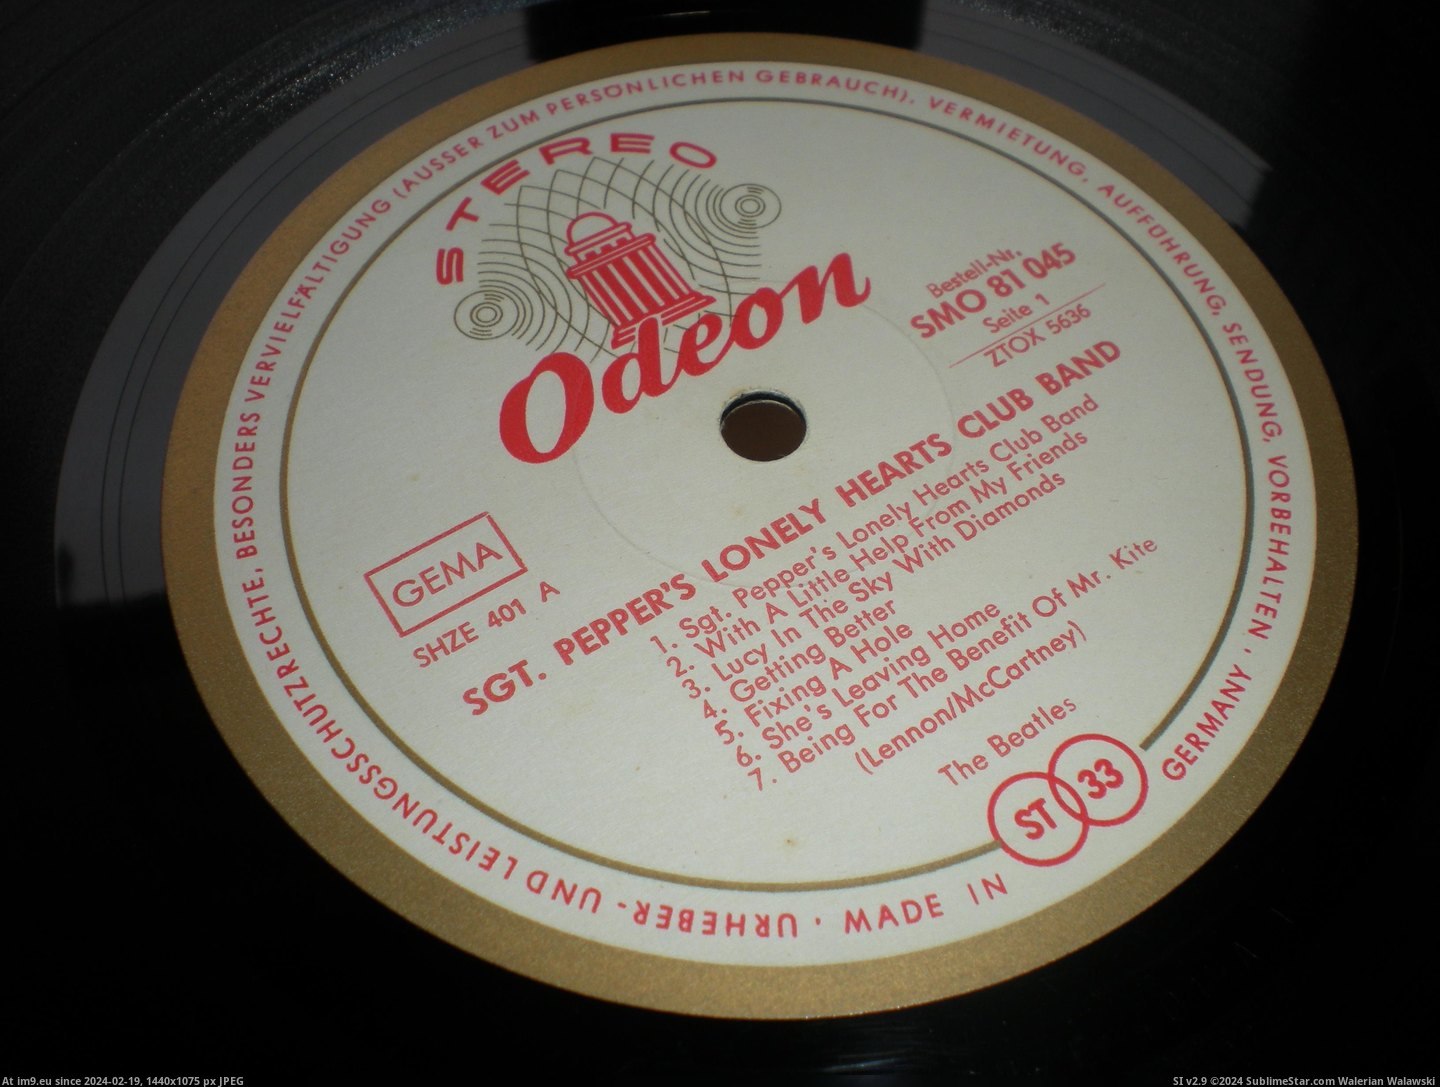 #Sgt  #Odeon Sgt ODEON 1 Pic. (Obraz z album new 1))